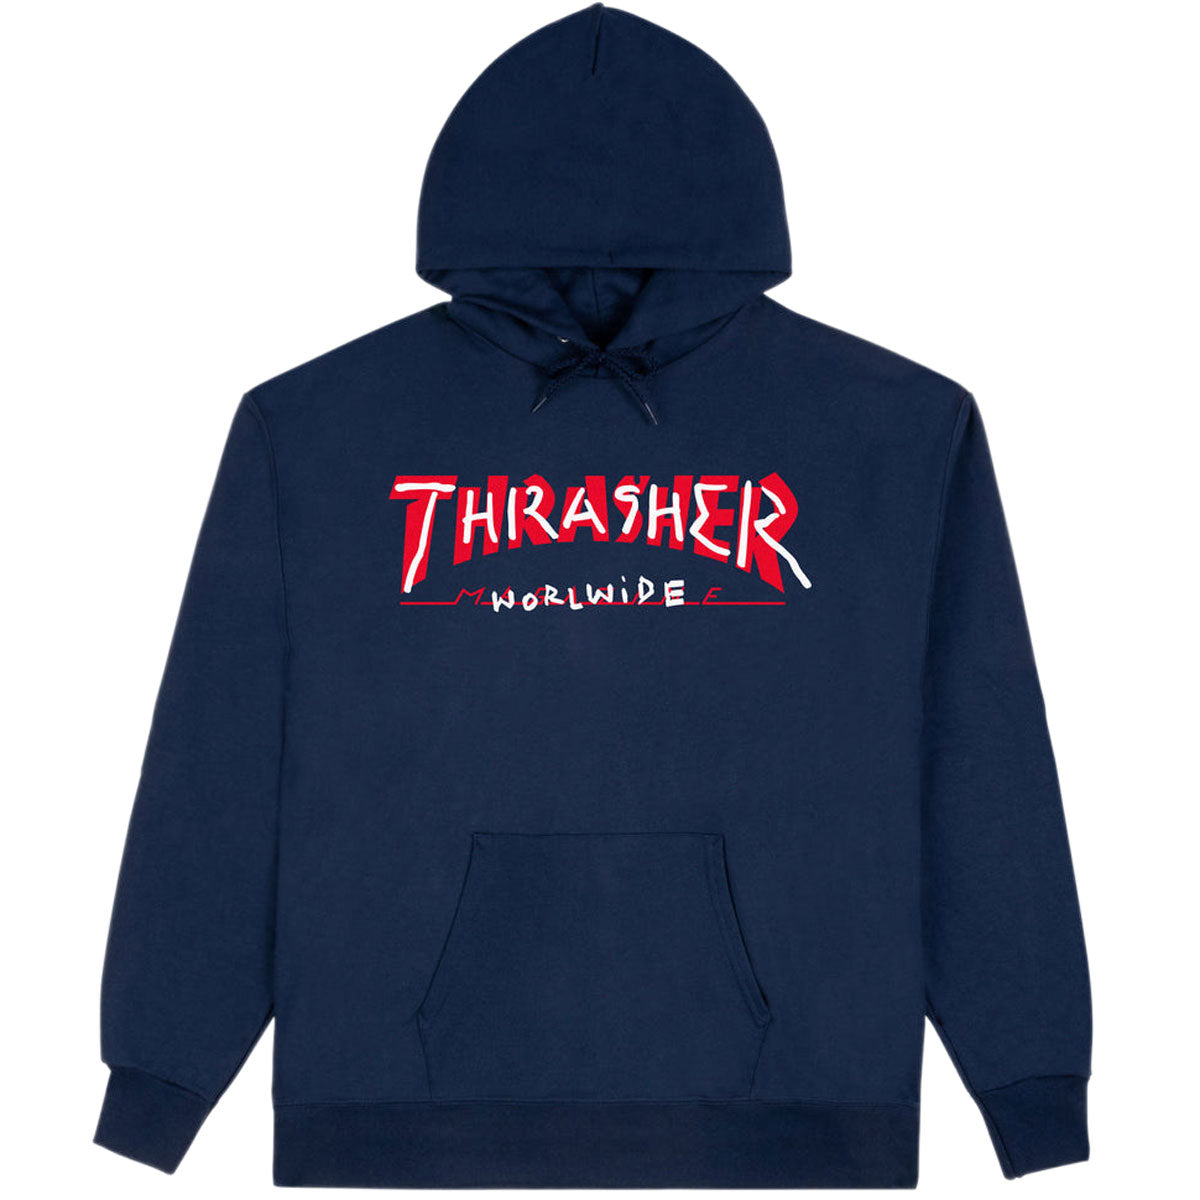 Thrasher Trademark Hoodie - Navy image 1